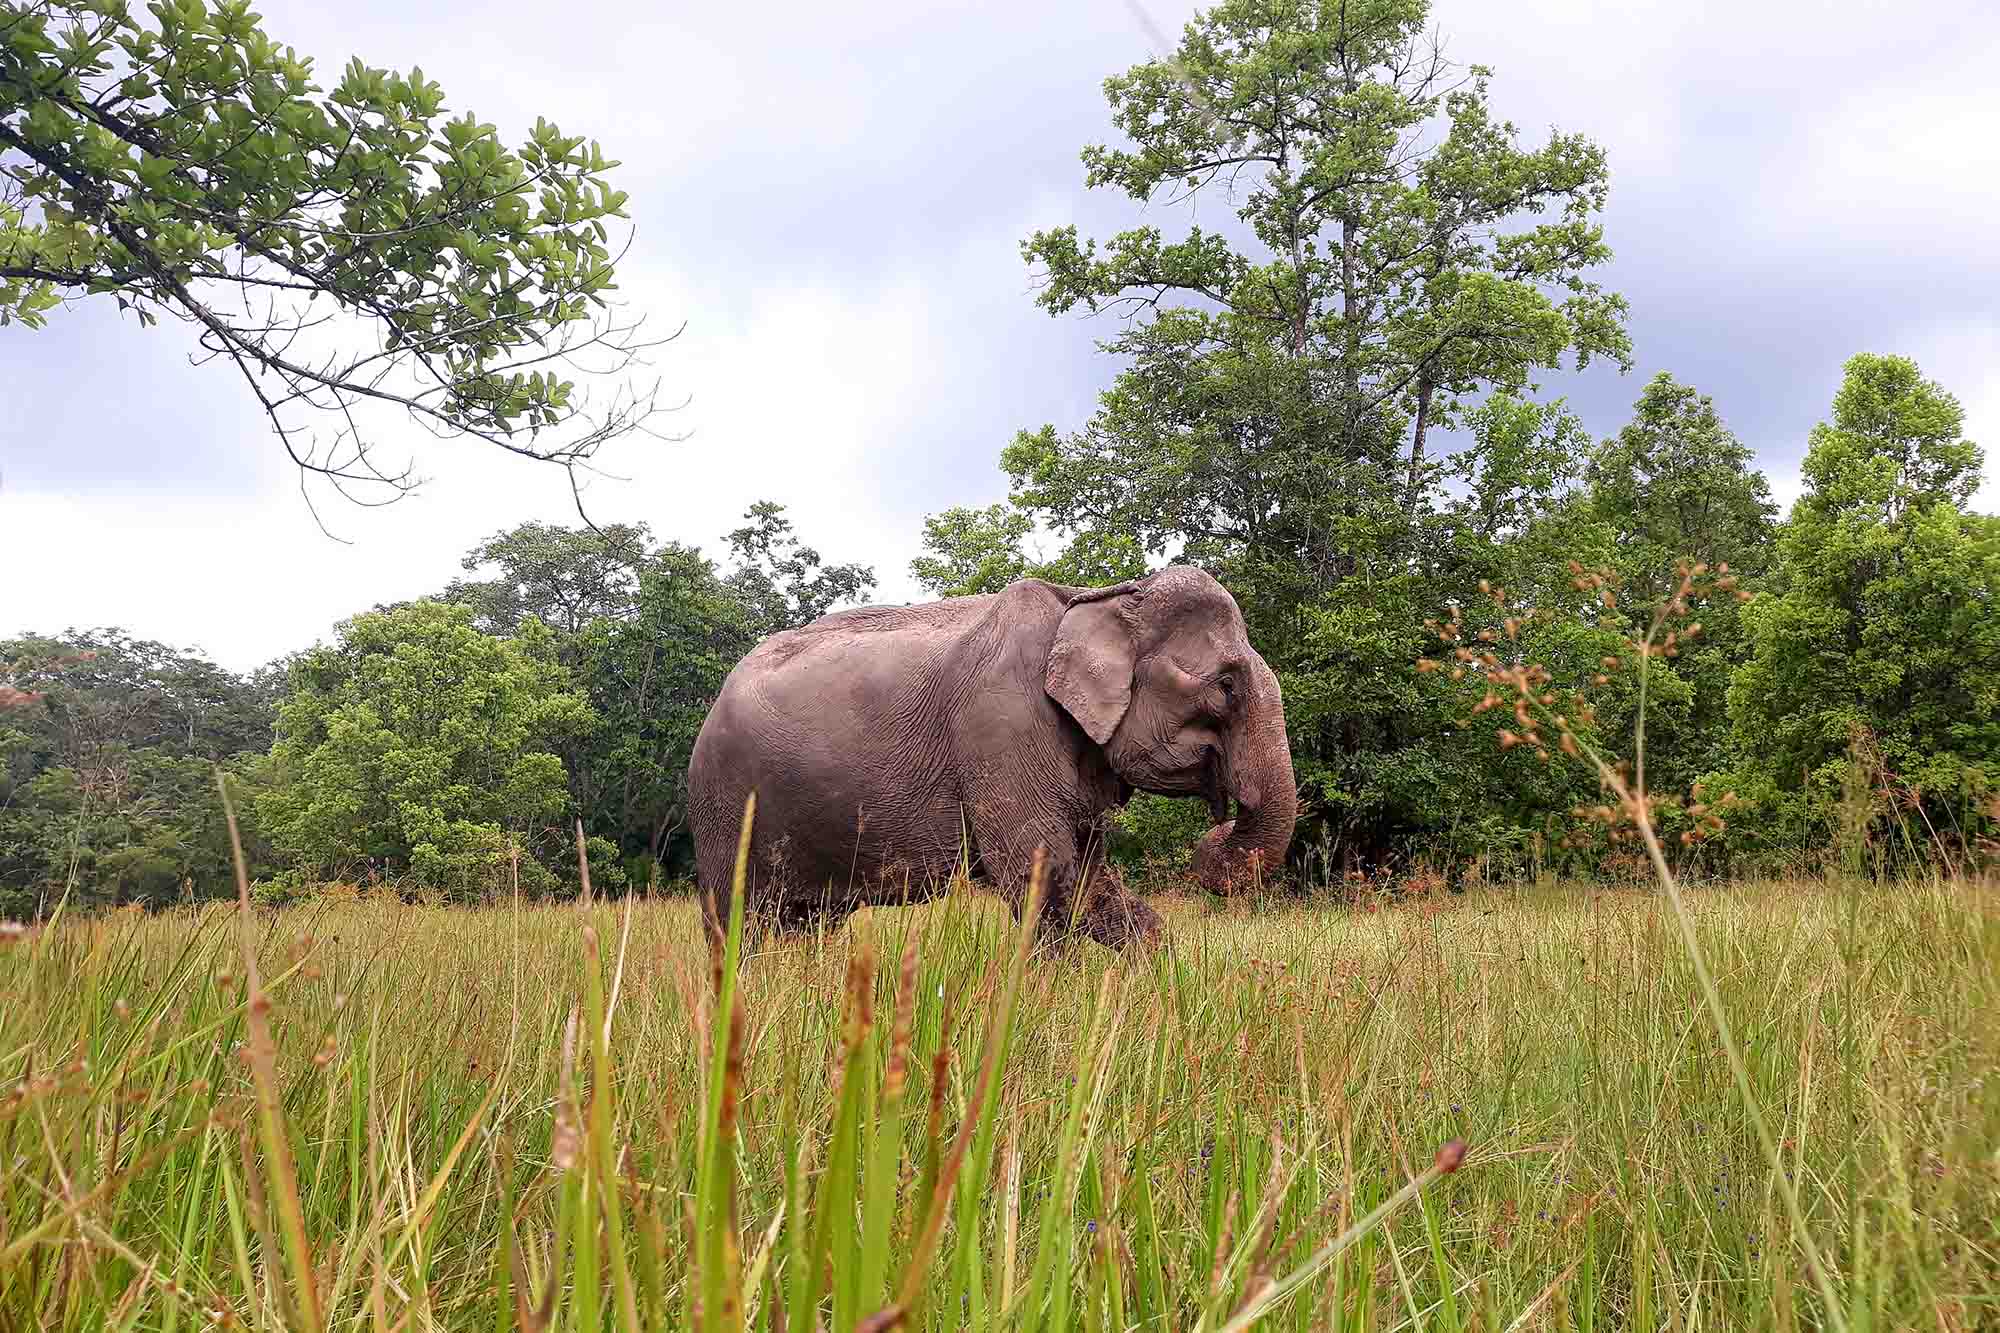 Animals Asia’s Ethical Elephant Tour Initiative